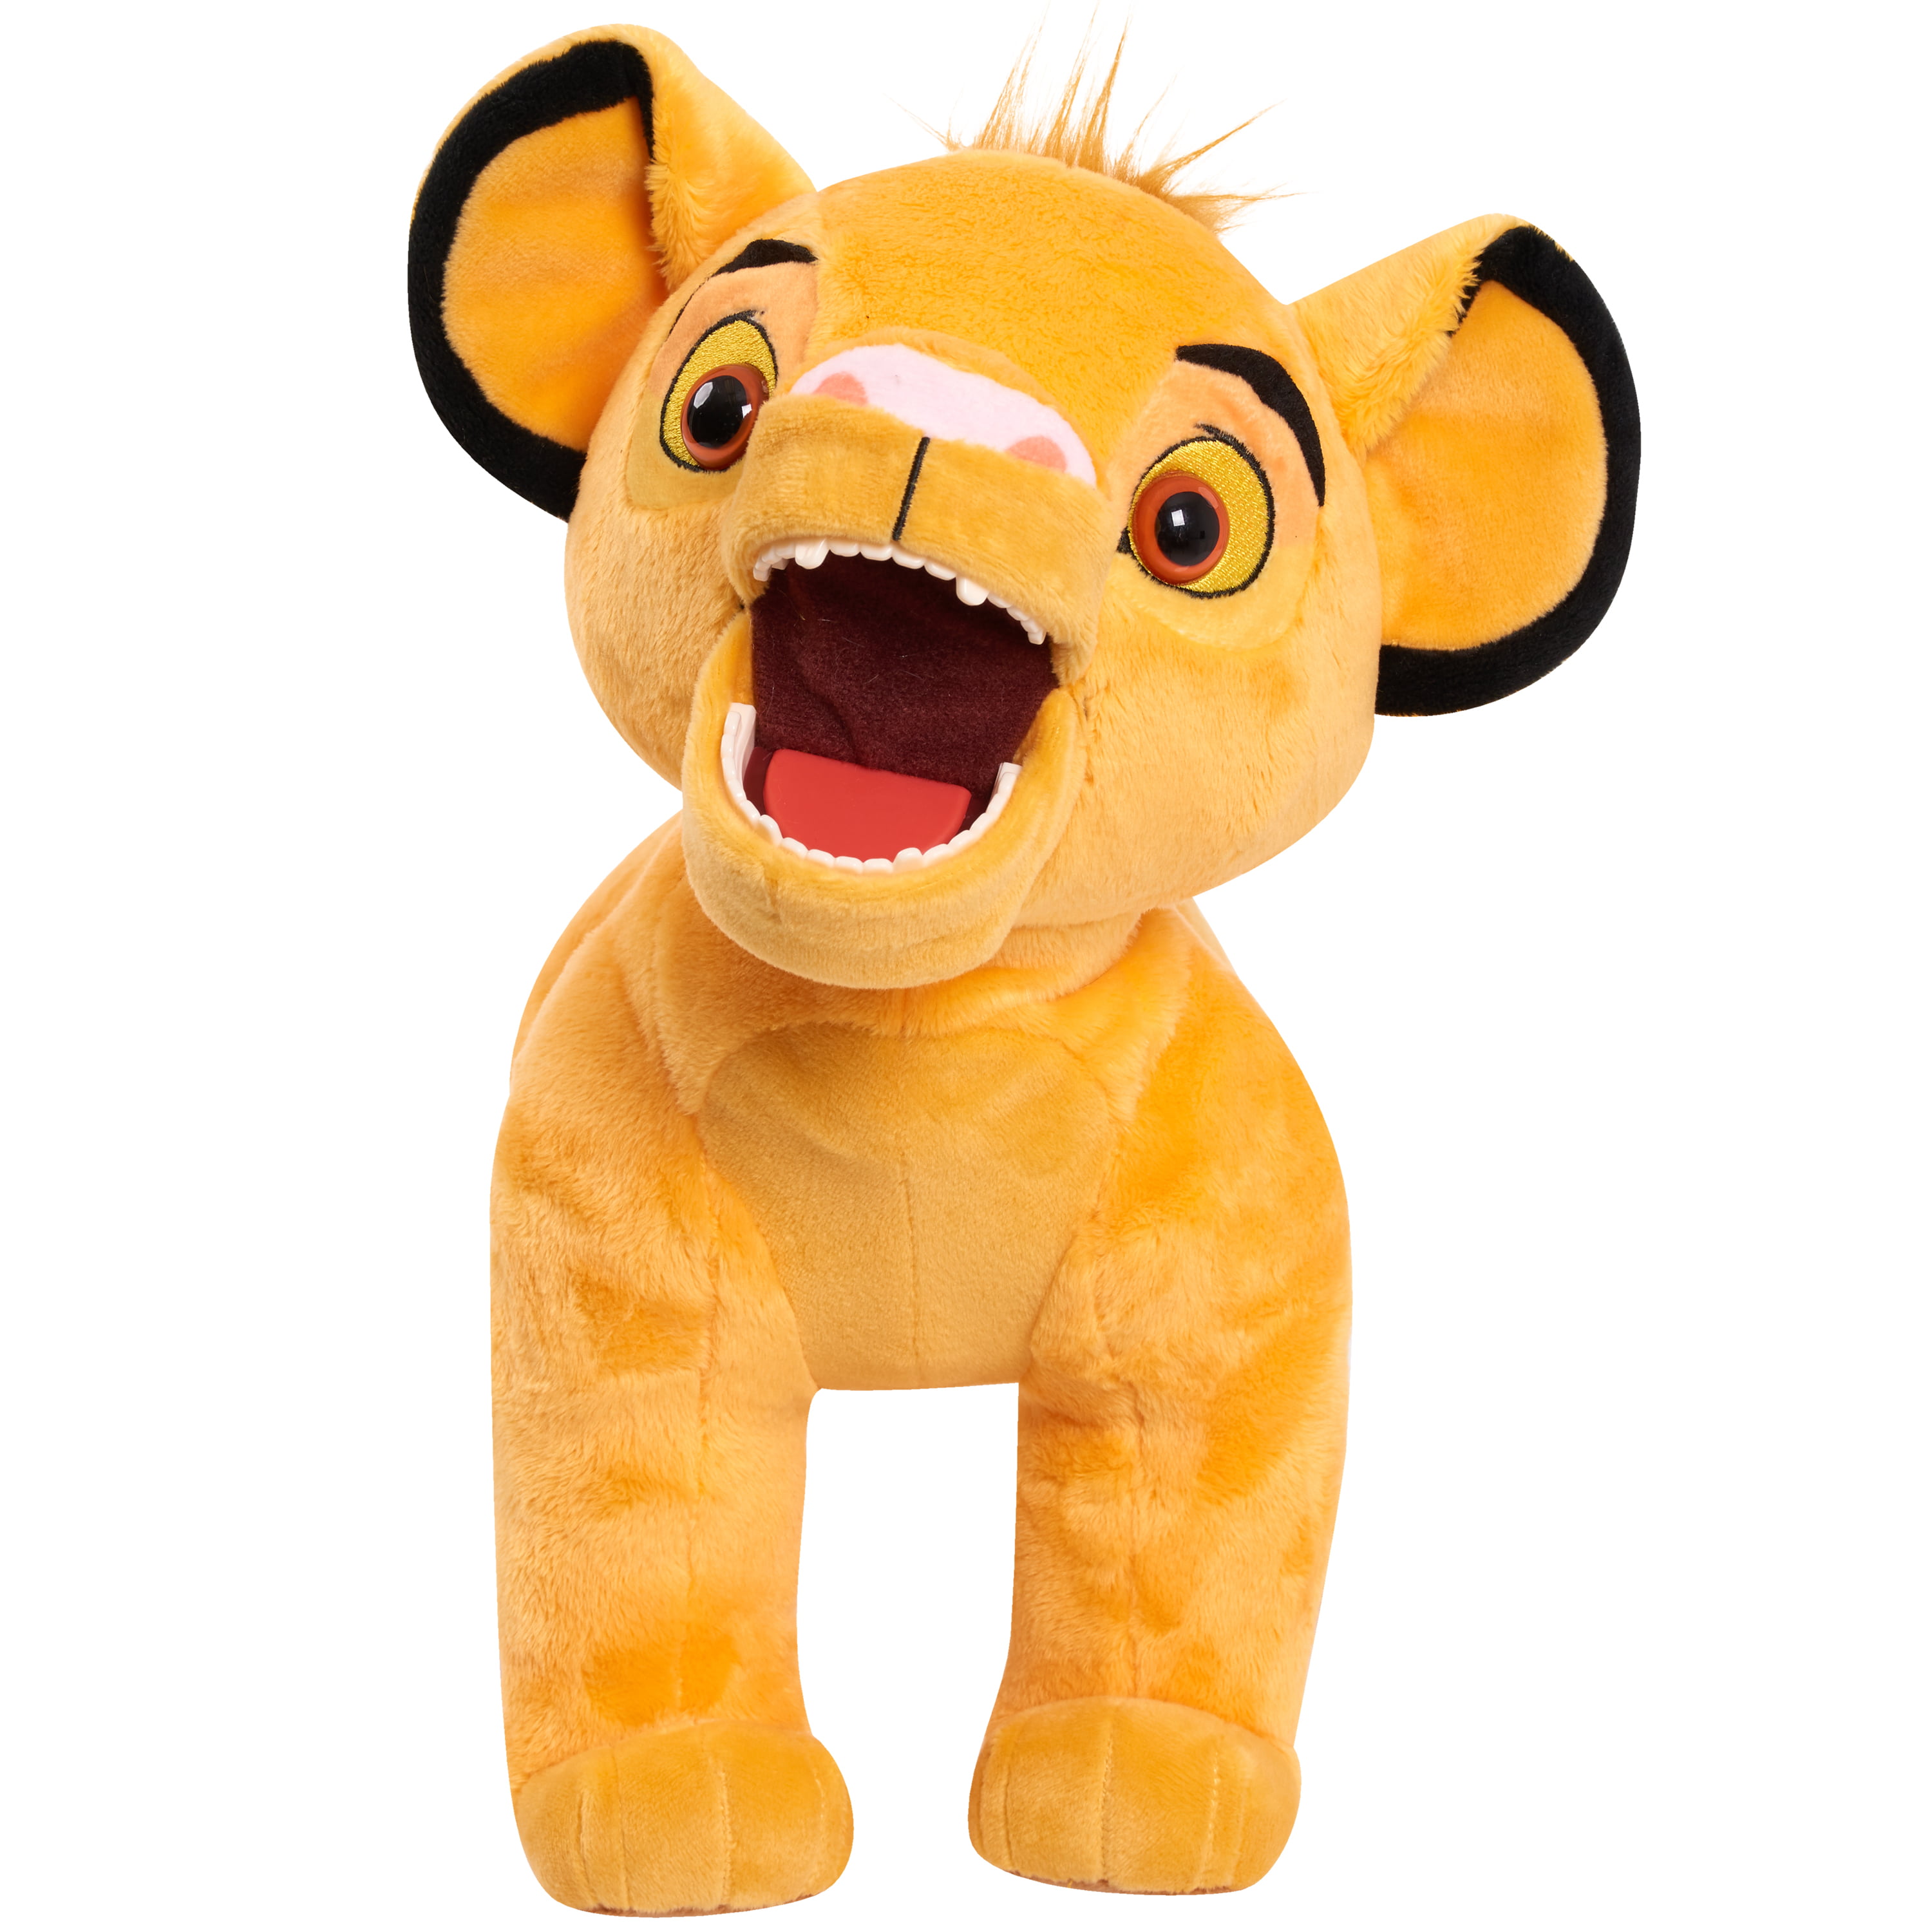 simba lion king stuffed animal